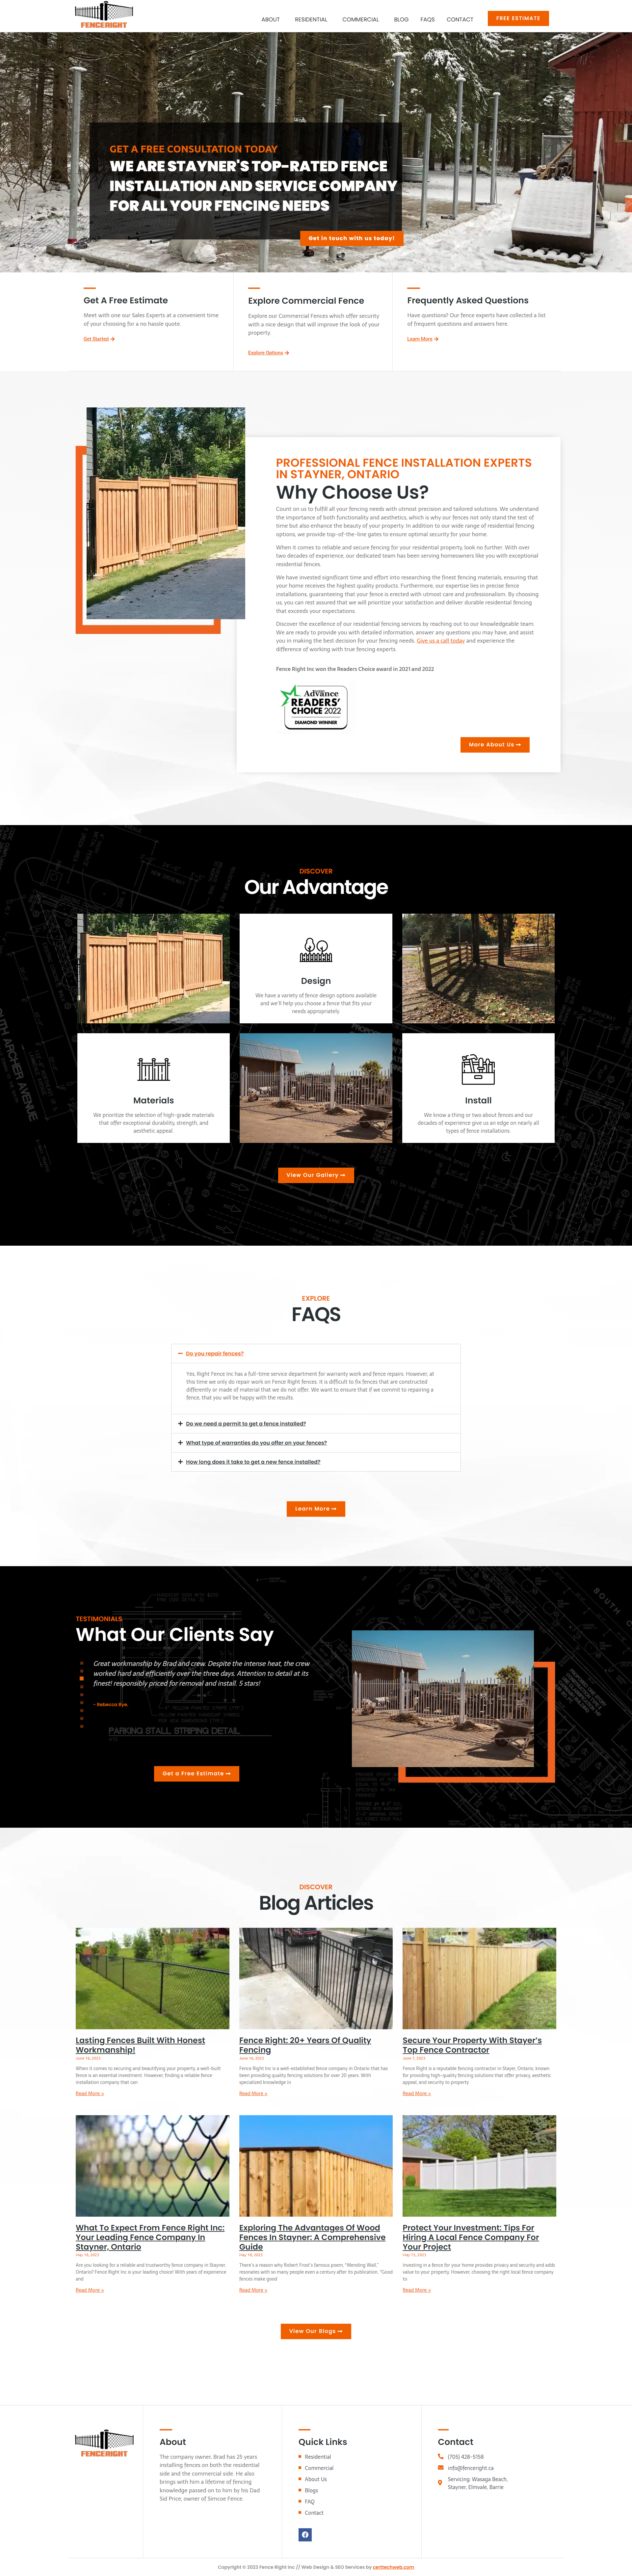 A website design for a fencing company.